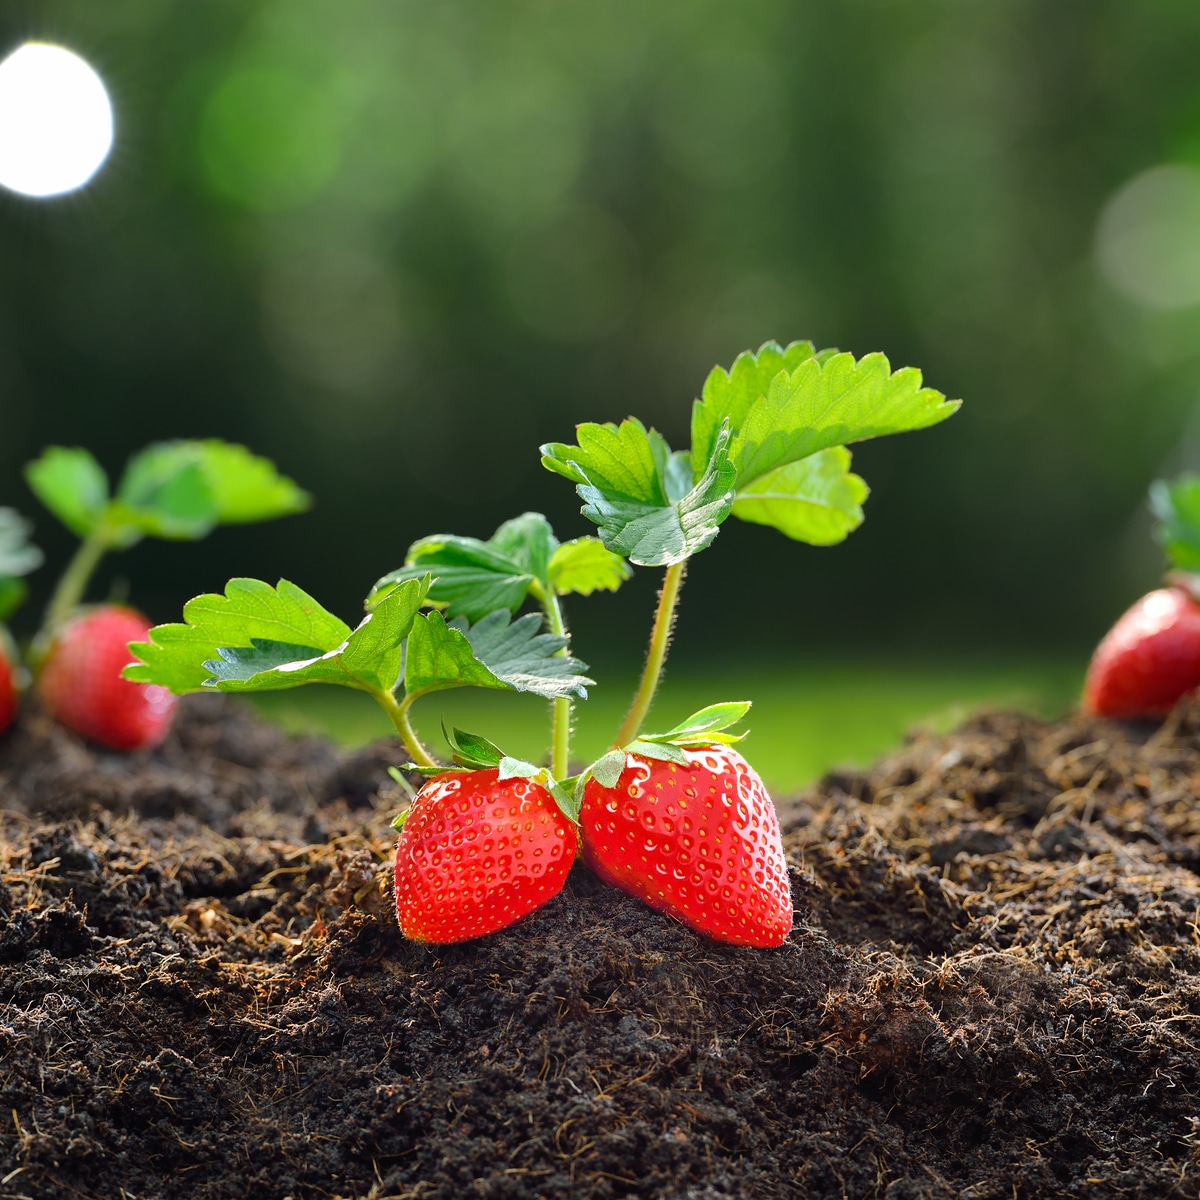 https://strawberryplants.org/wp-content/uploads/Growing-Strawberries-featured.jpg